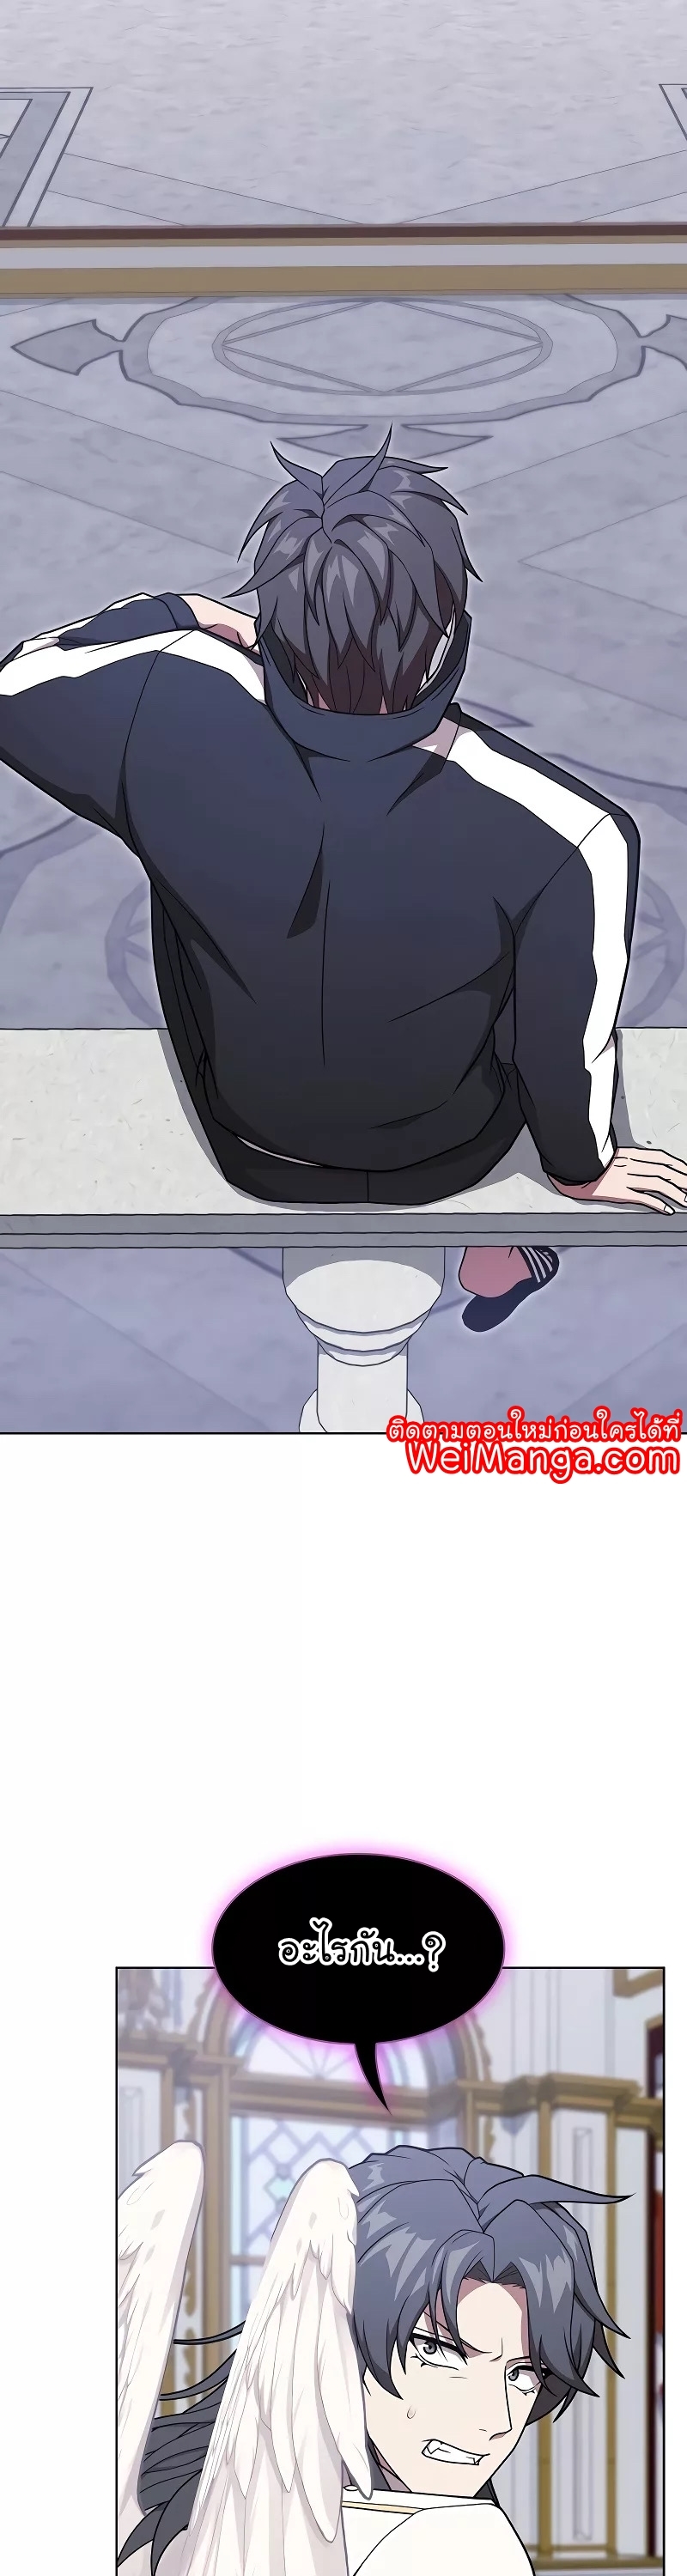 The Tutorial Towel Manga Manhwa Wei 183 (21)